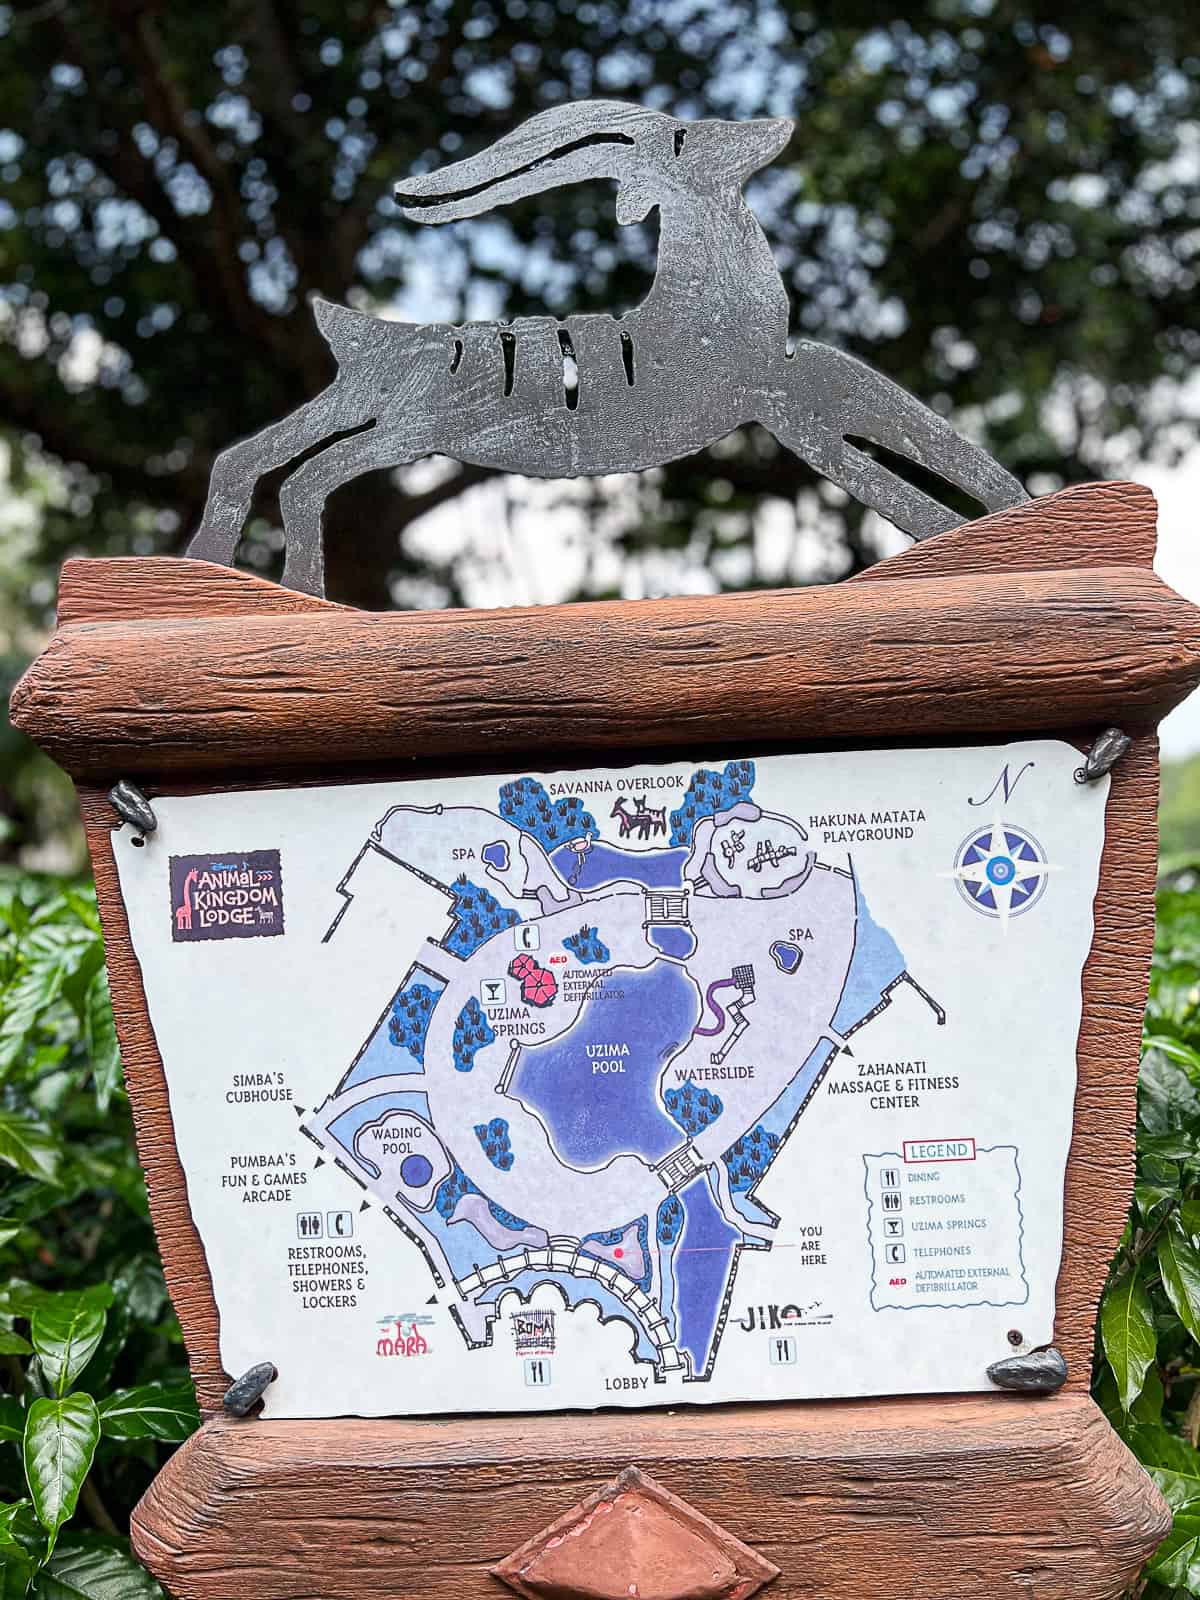 Map of Animal Kingdom Jambo House with Savannah Overlook Area